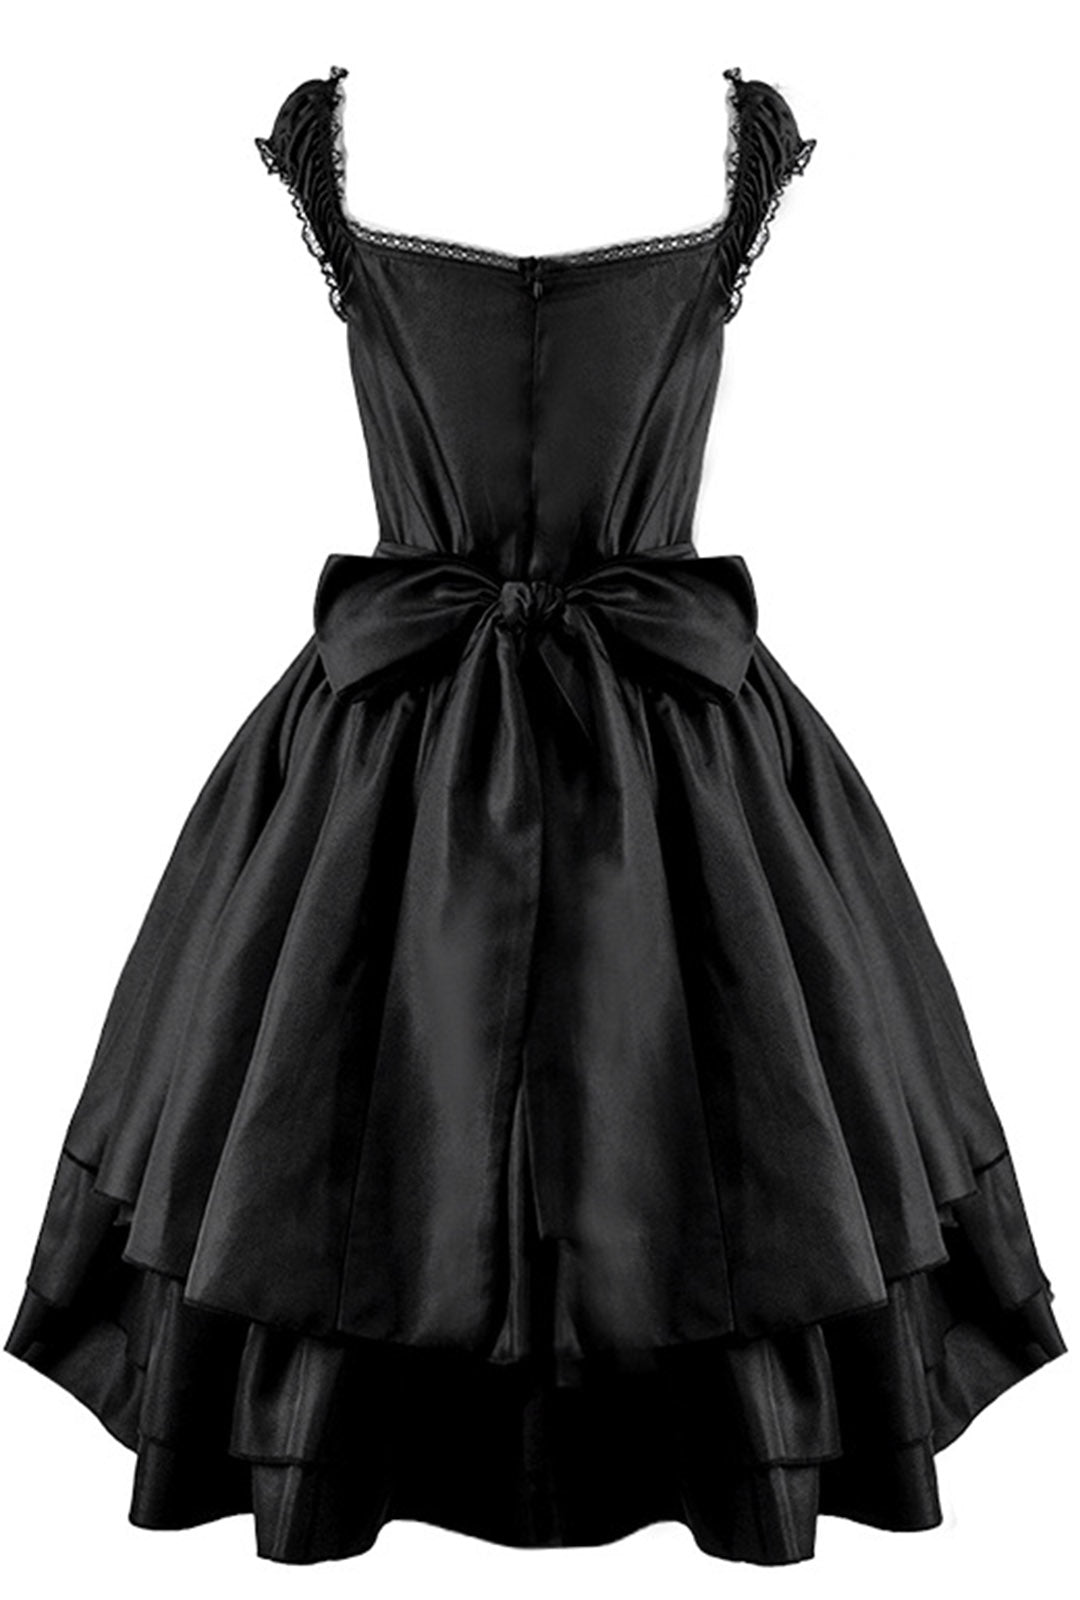 Black Gothic Victorian Dress